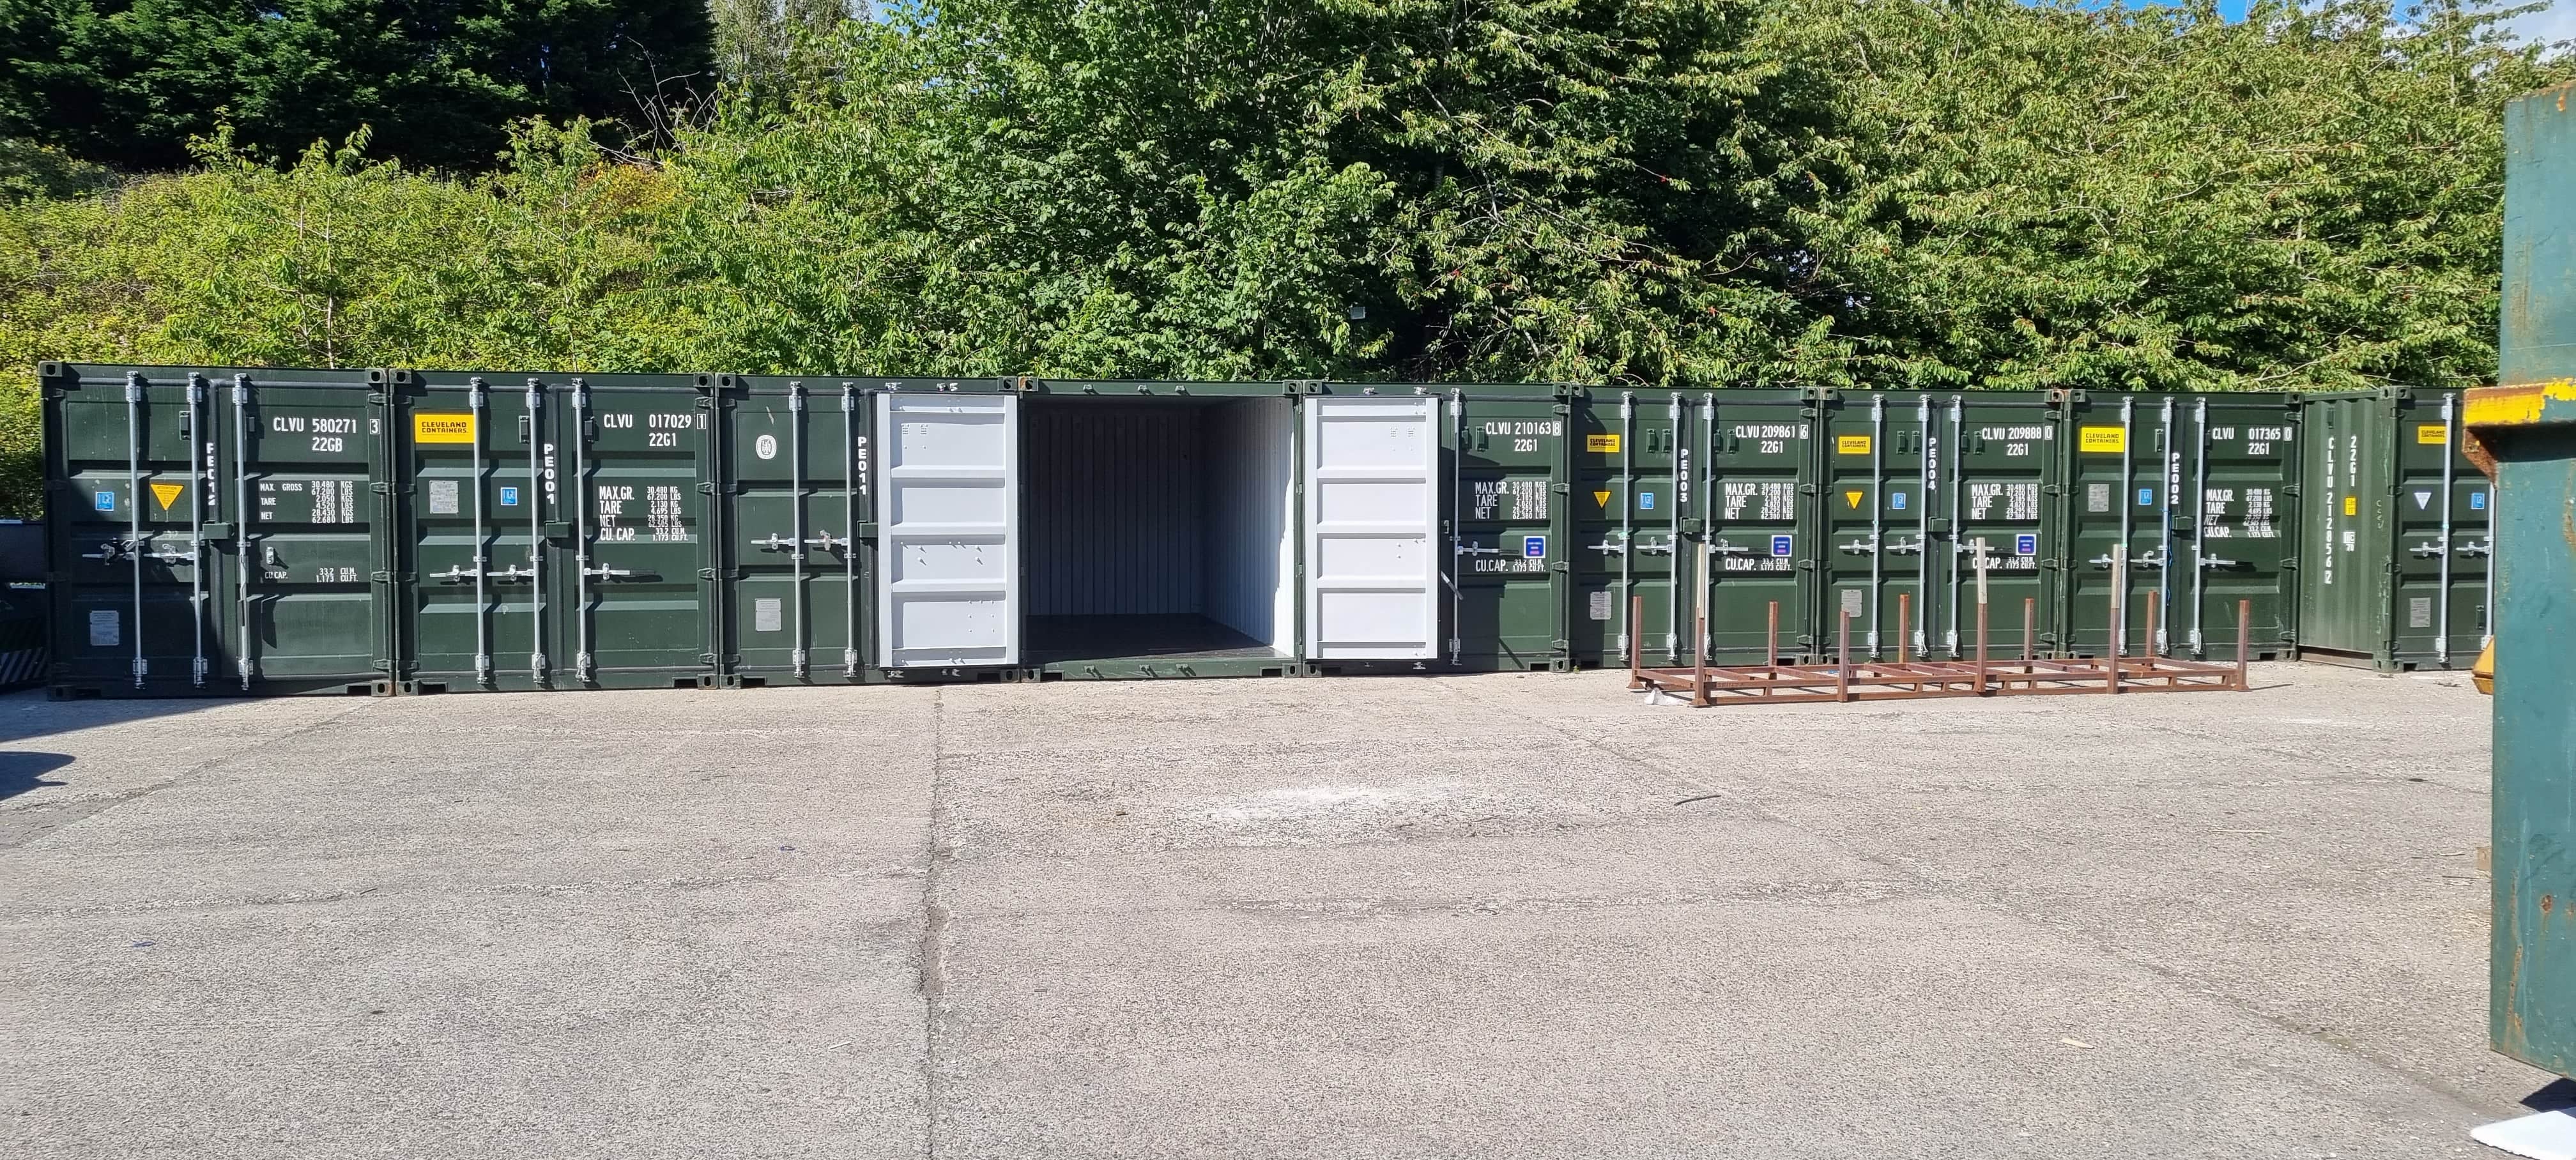 Cuboid Self Storage Caernarfon, UK, self storage facility